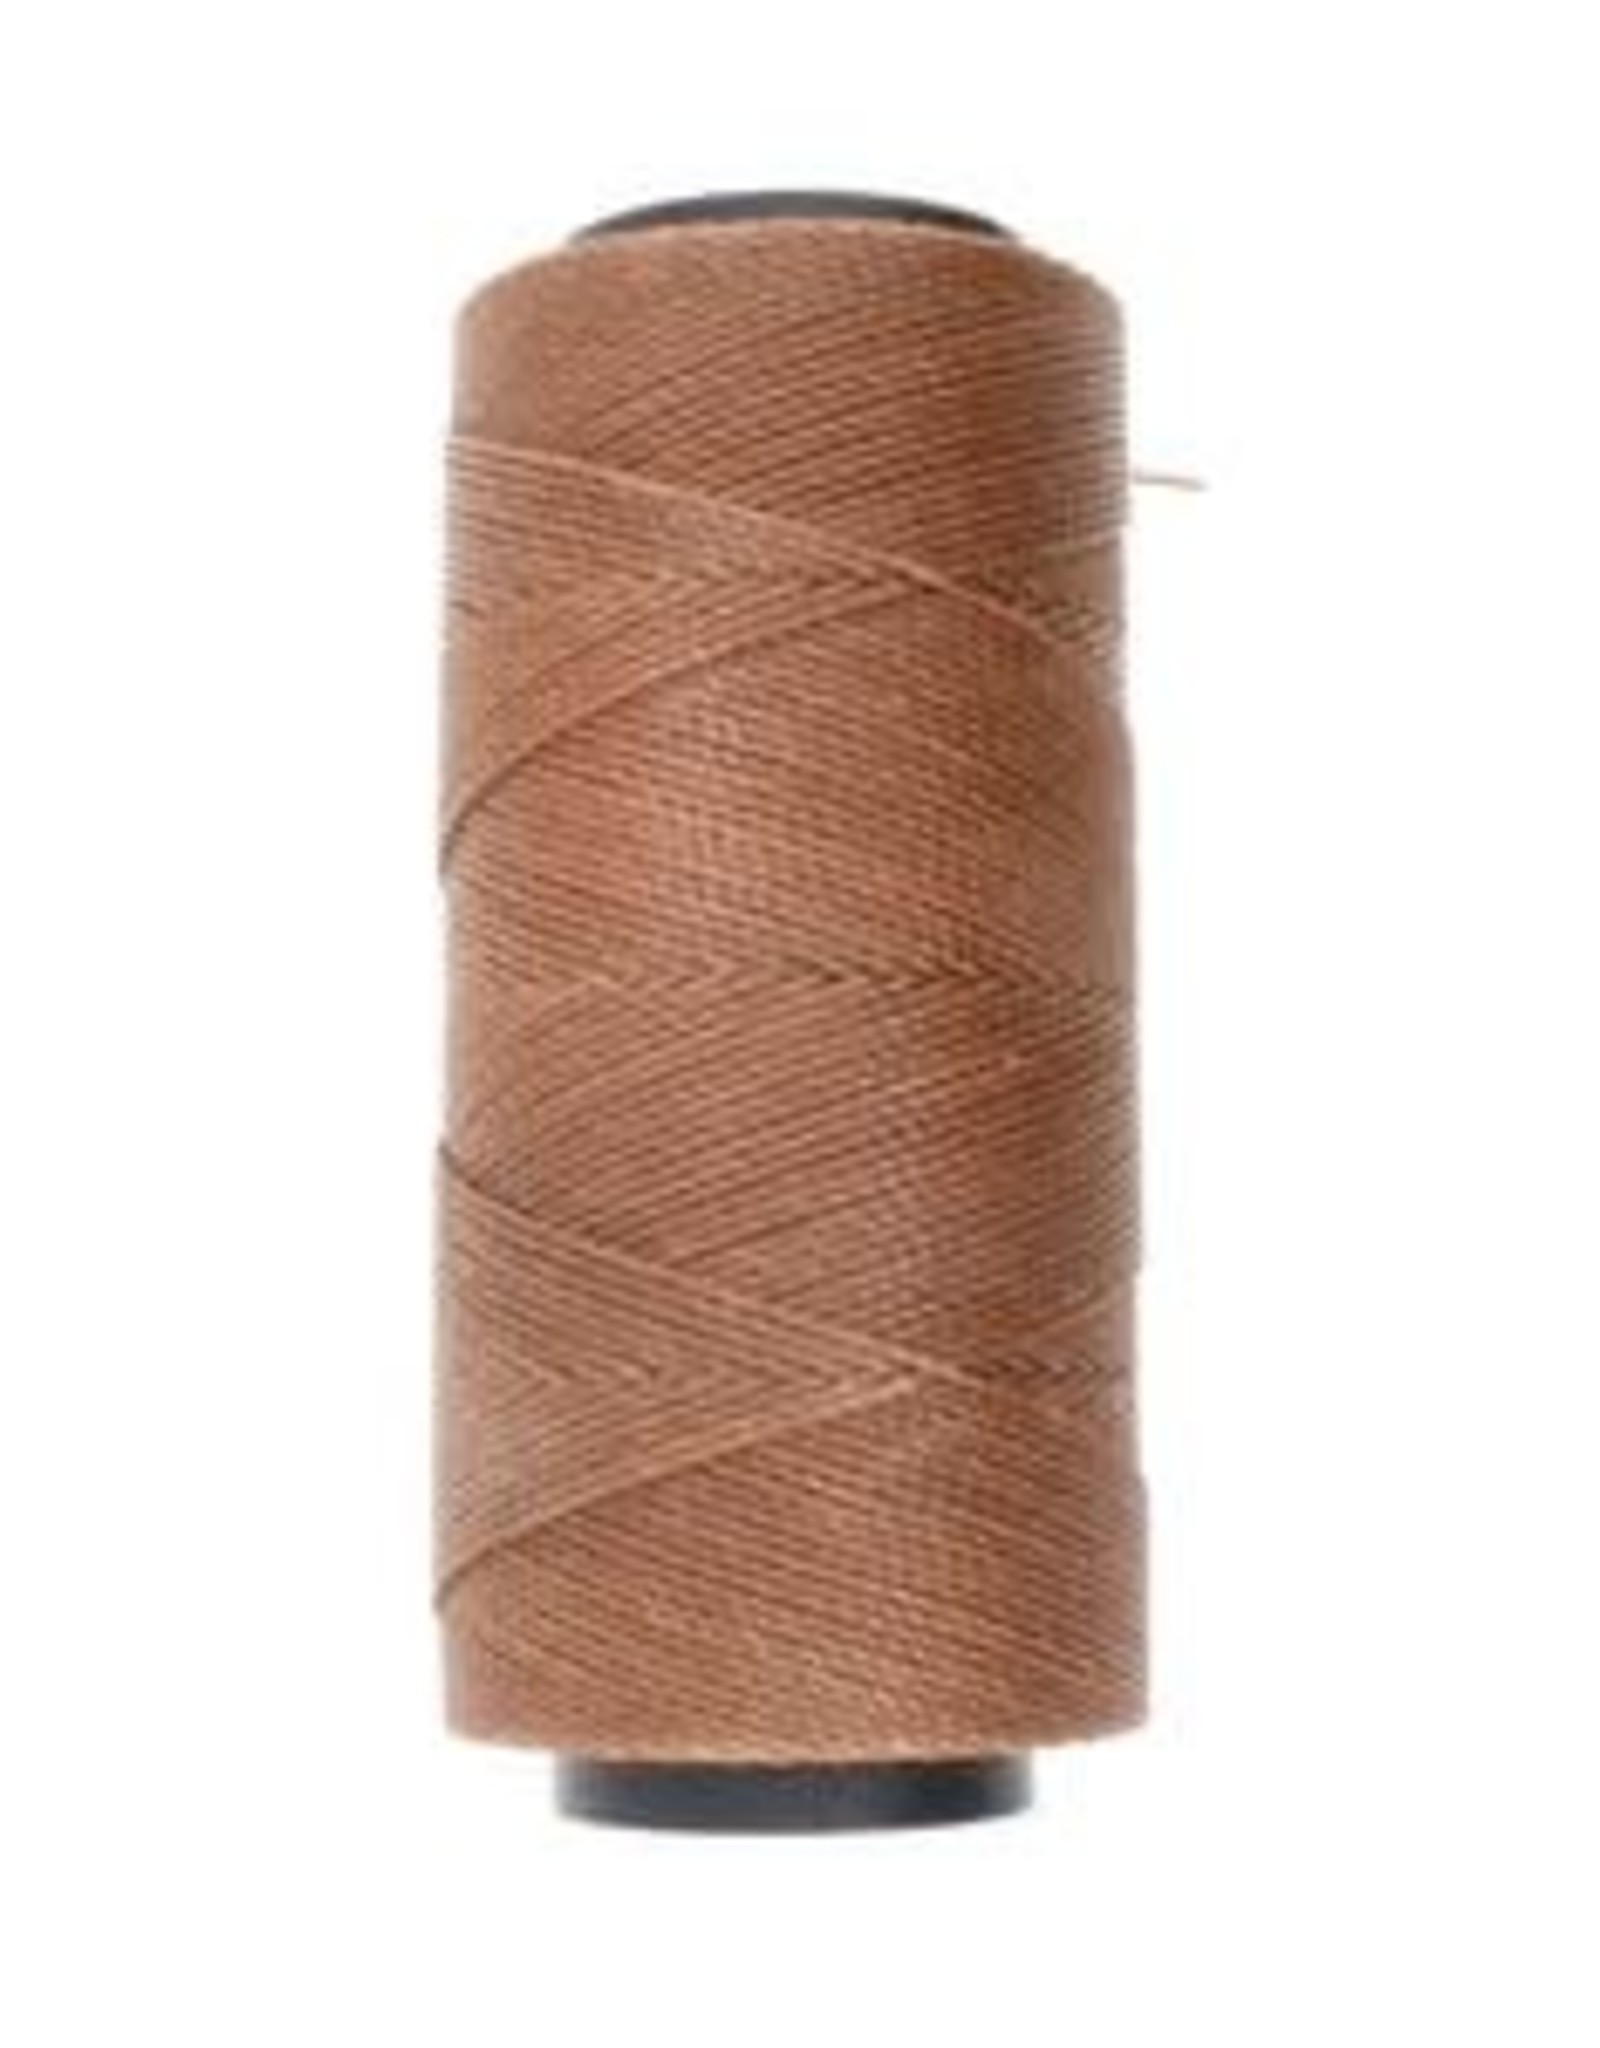 Knot-it, Cinnamon Waxed 2ply Brazilian Cord 144 Meters